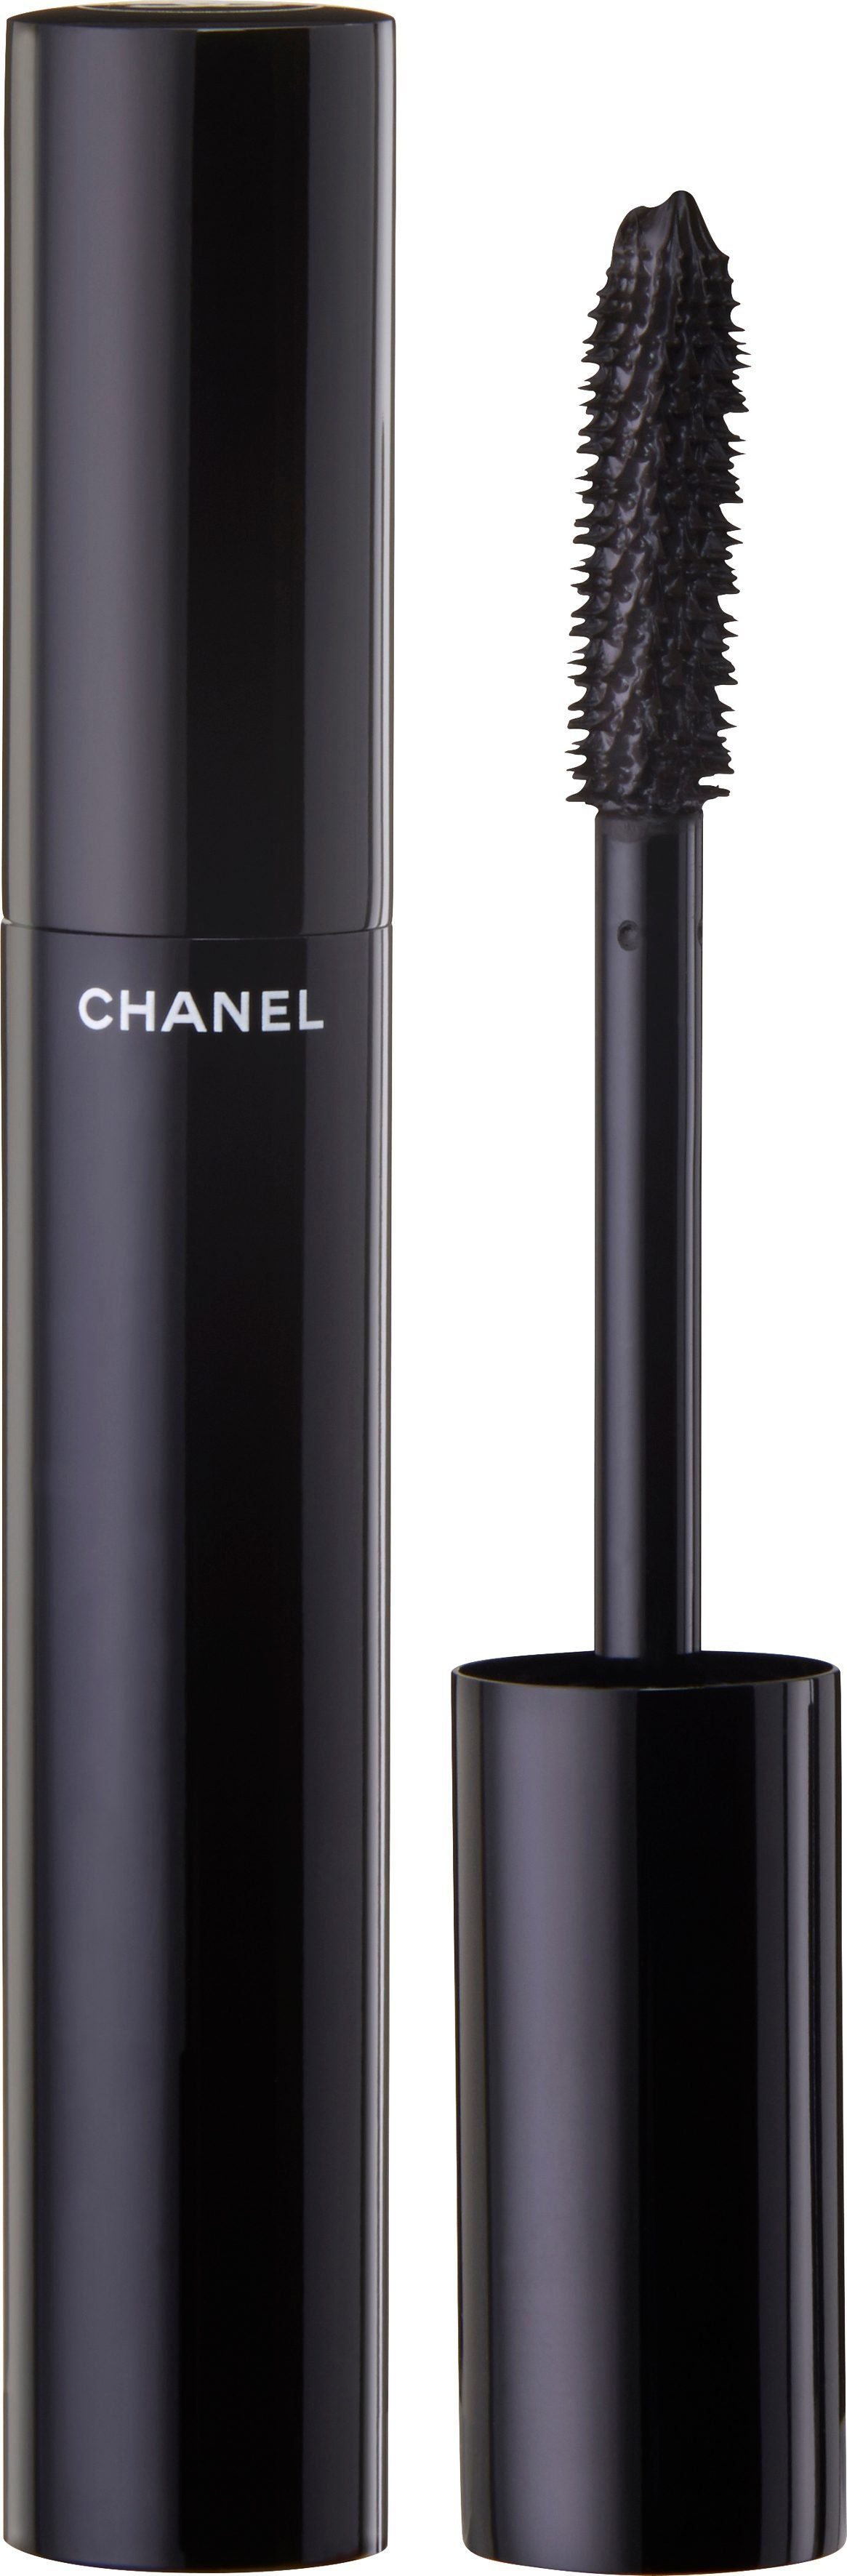 CHANEL Mascara Innovative Le Bürste Volume Chanel, de